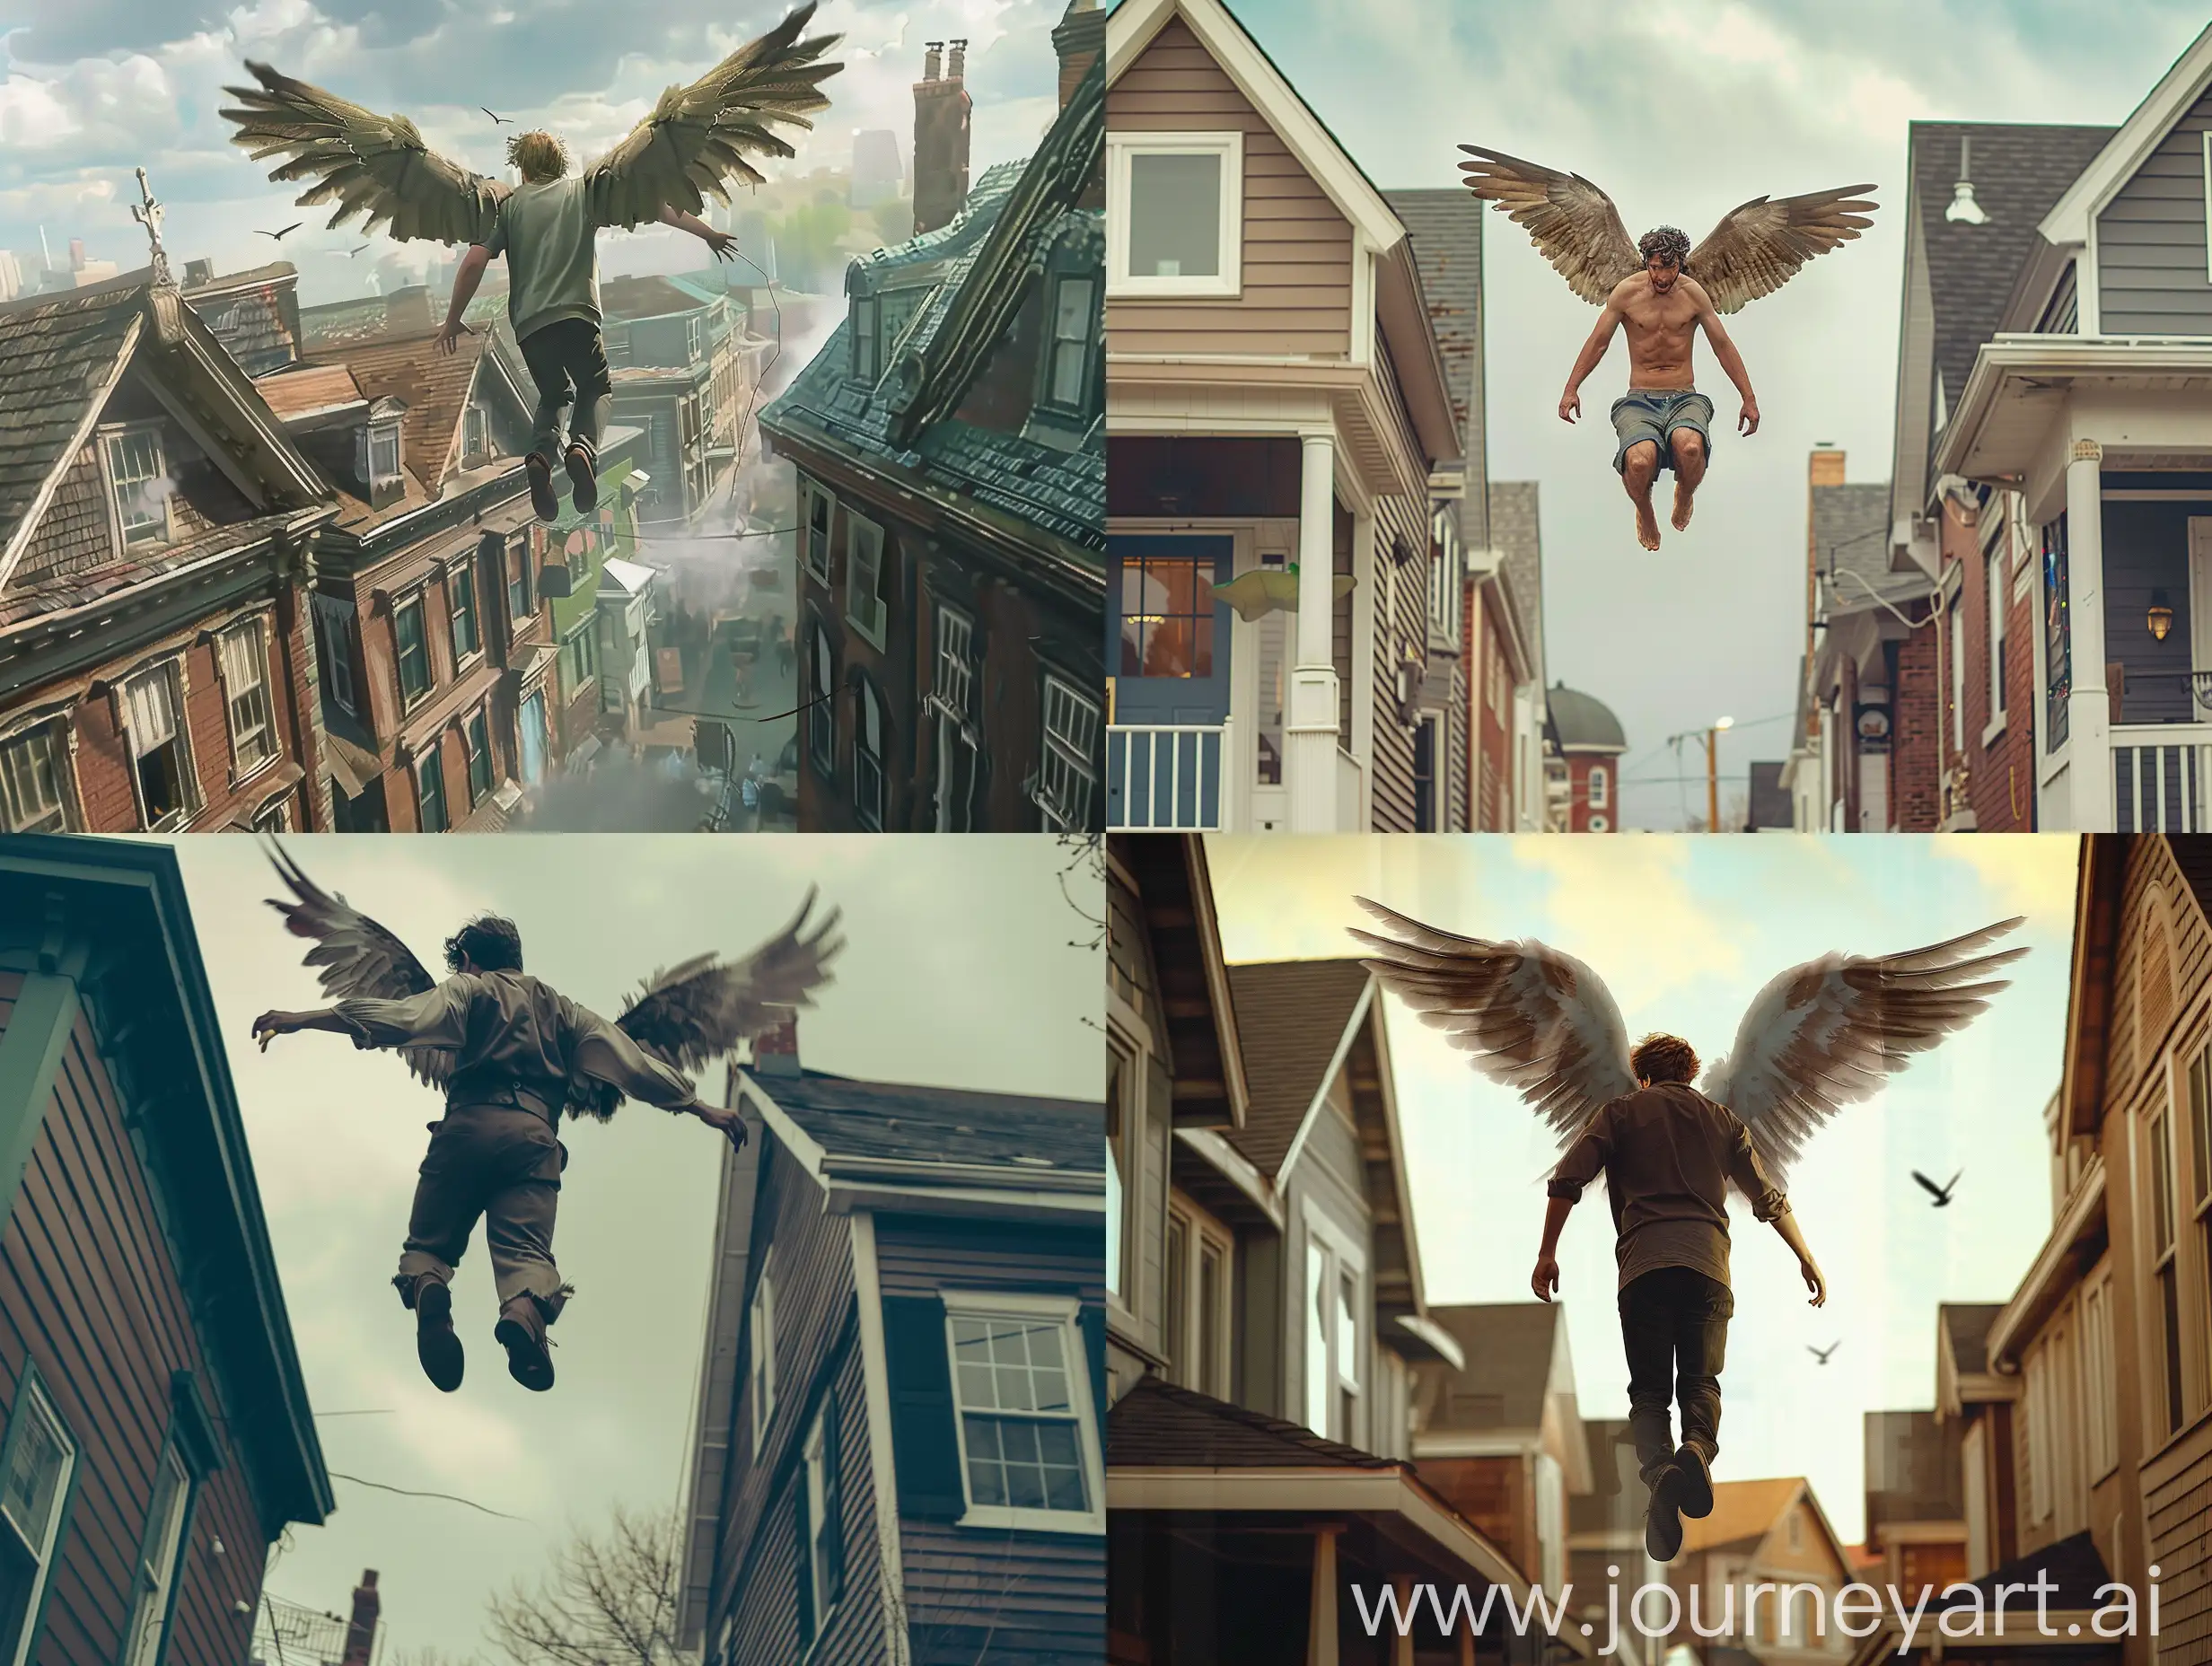 A man with wings flies between houses